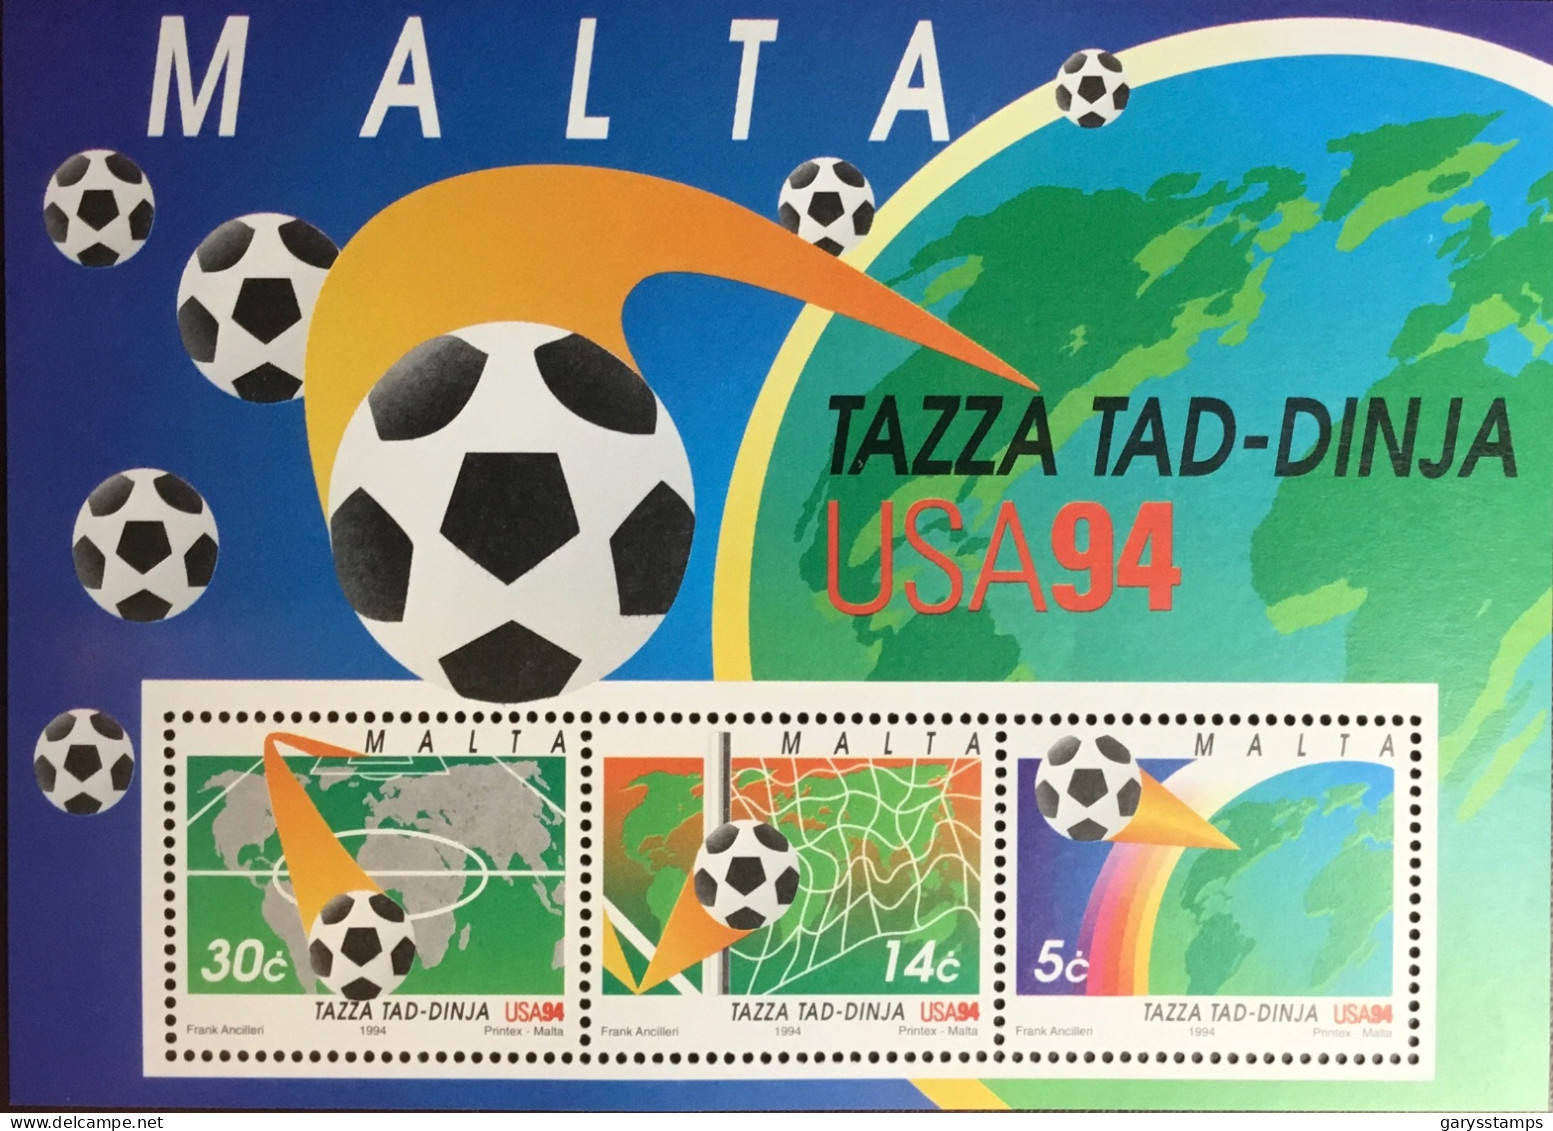 Malta 1994 World Cup Minisheet MNH - Malte